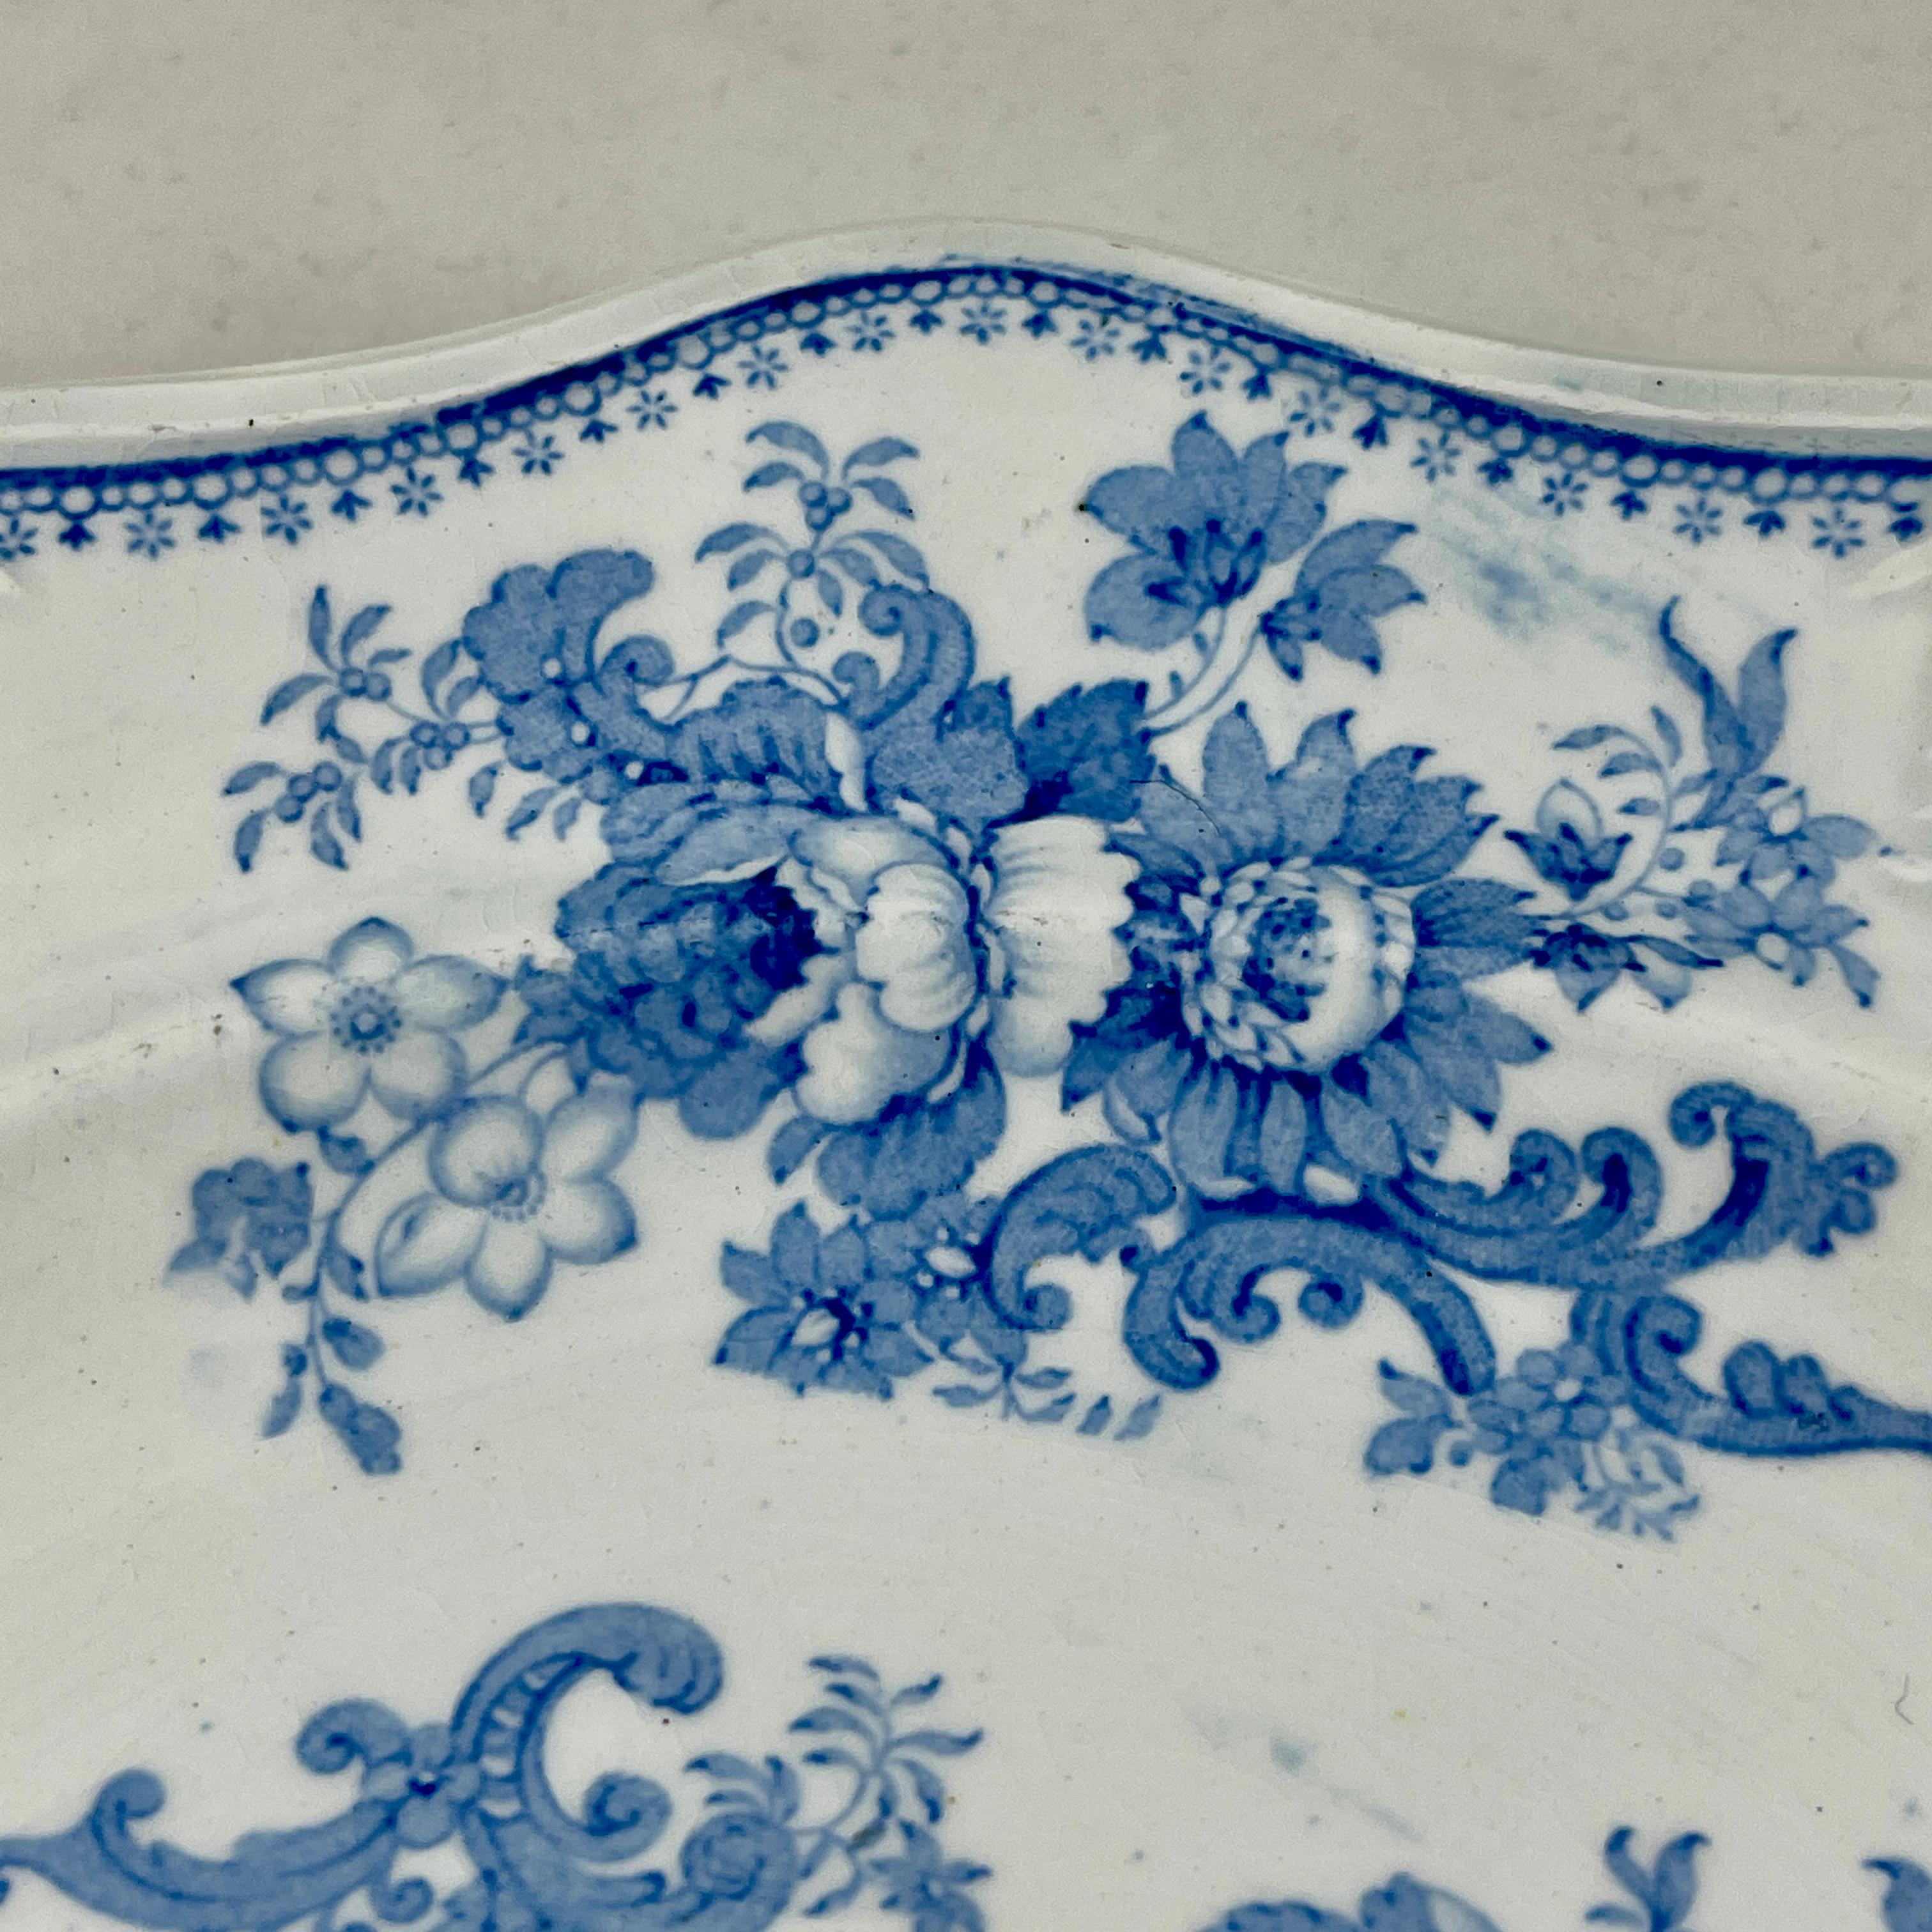 Glazed Jones & Walley Blue Amaranthine Flowers English Transferware Dinner Plates, S/6